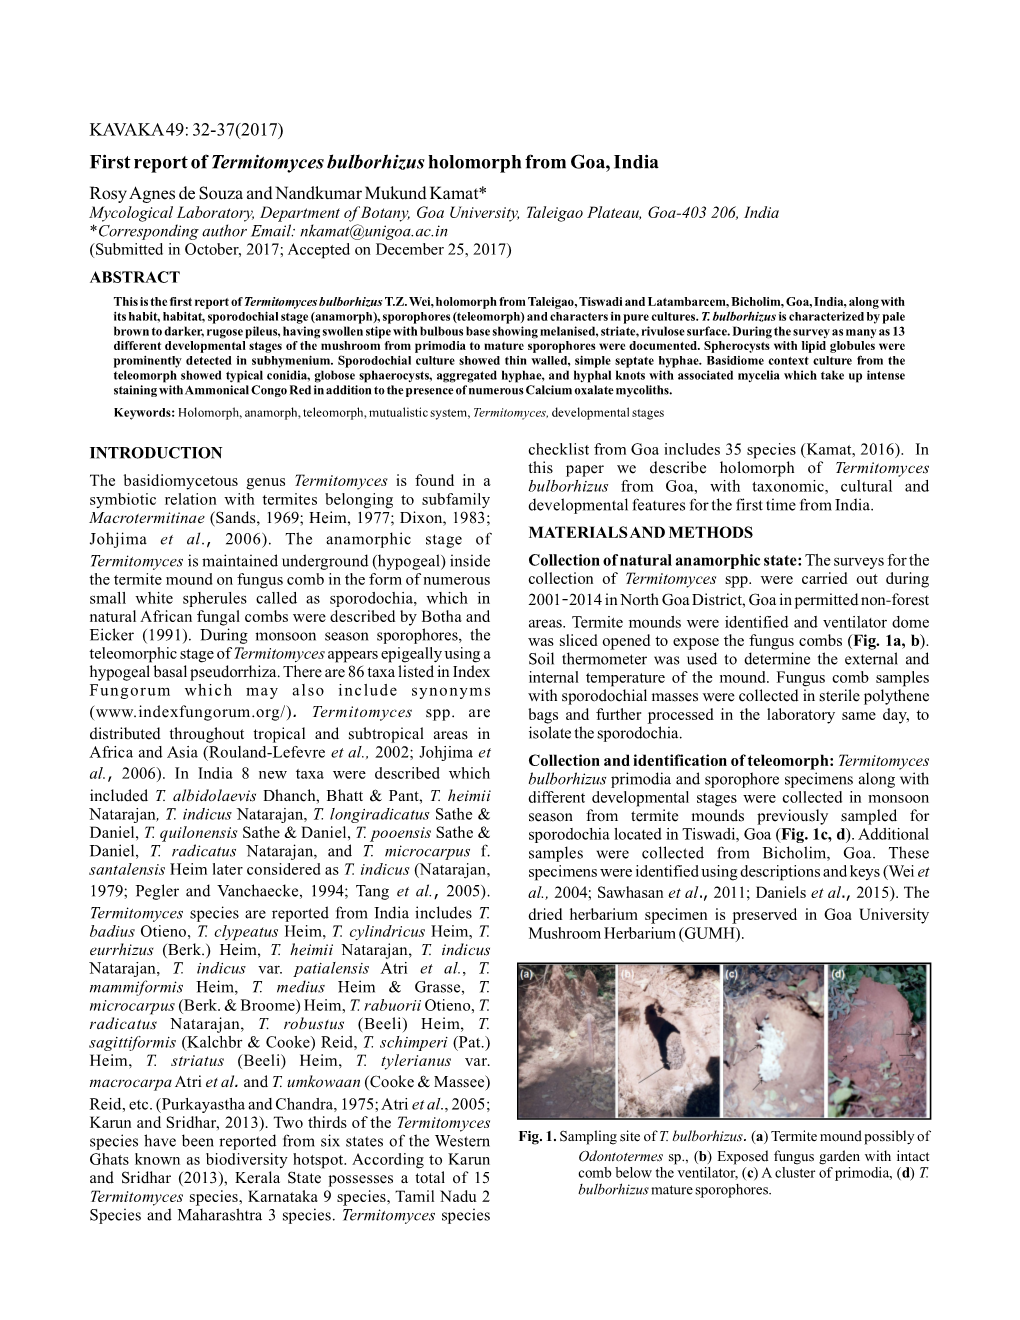 First Report of Holomorph from Goa, India Termitomyces Bulborhizus